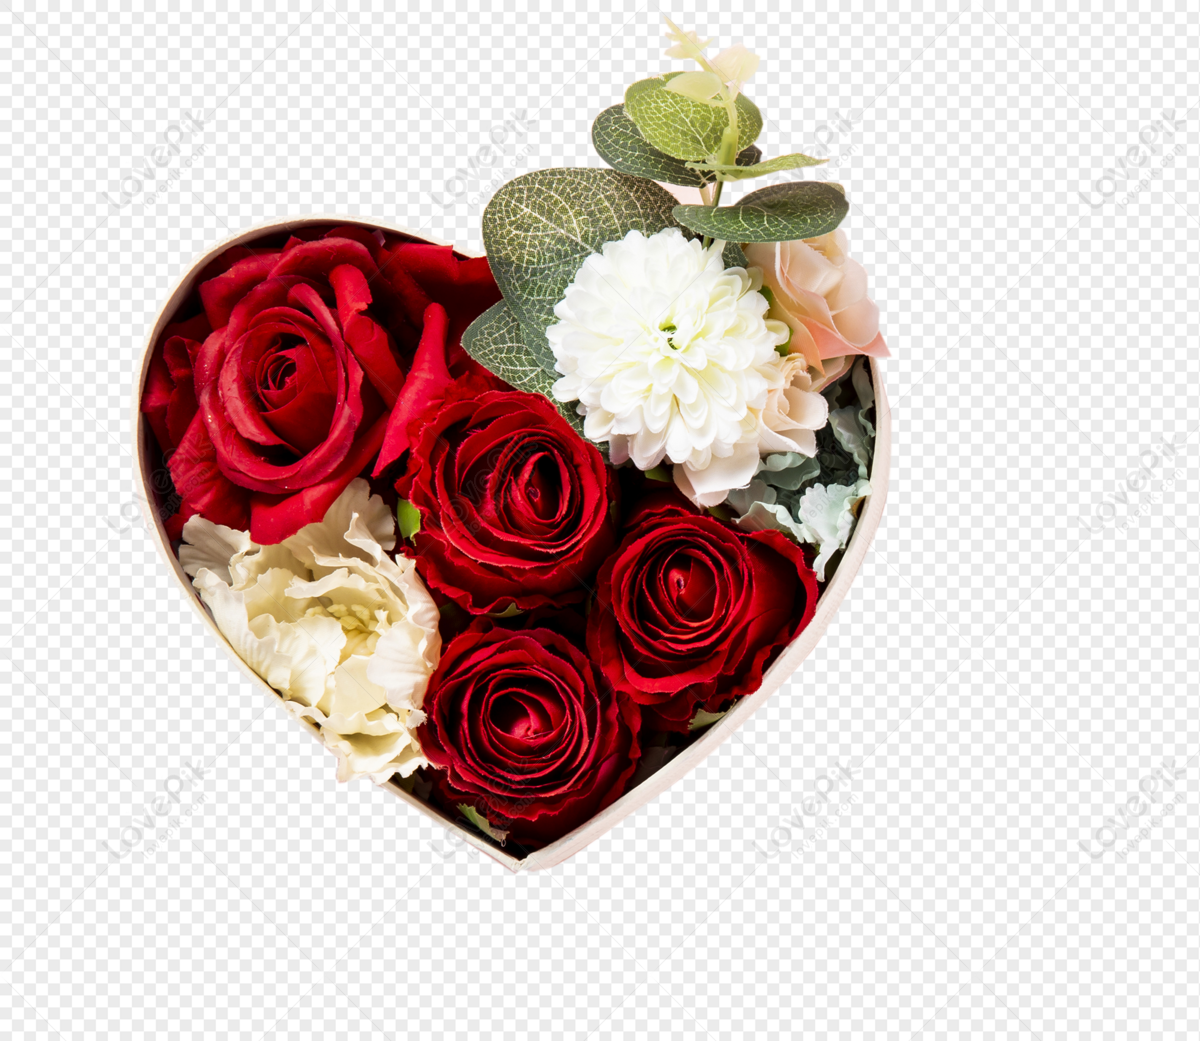 Romantic Couple PNG Image, Hand Drawn Valentine Romantic Couple Love Gift  Flowers Roses, Hand Drawn, Valentine, Couple PNG Image For Free Download |  Flower gift, Romantic valentine, Love gifts